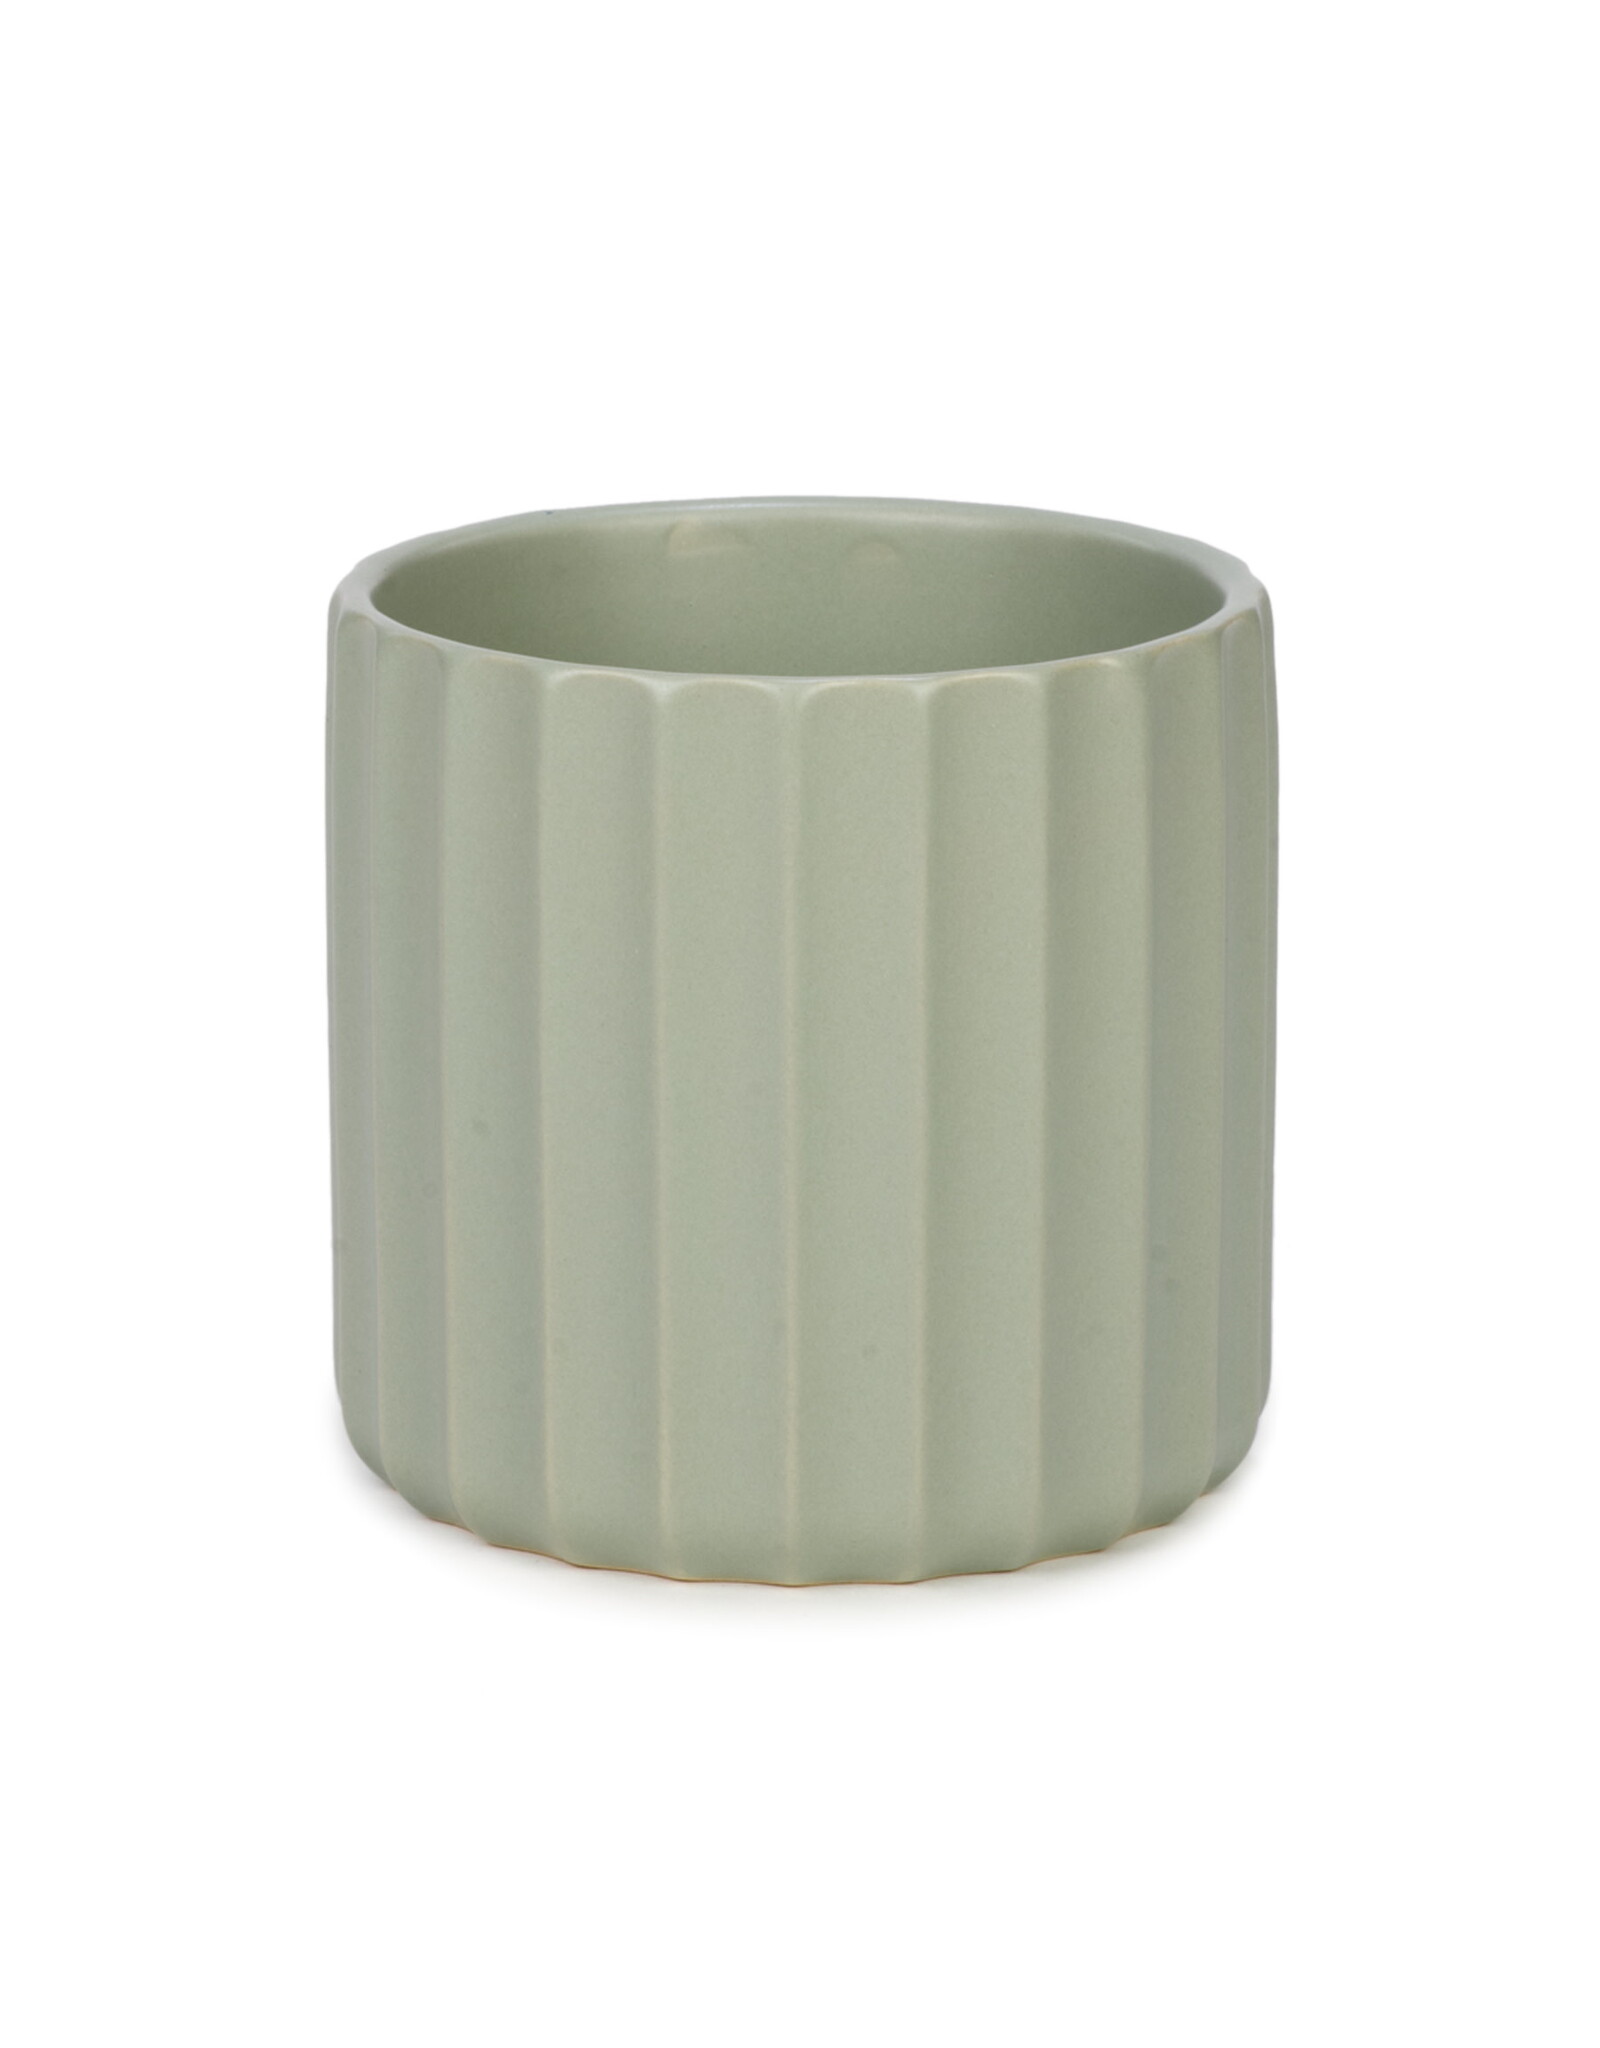 Green Ridged Ceramic Pot